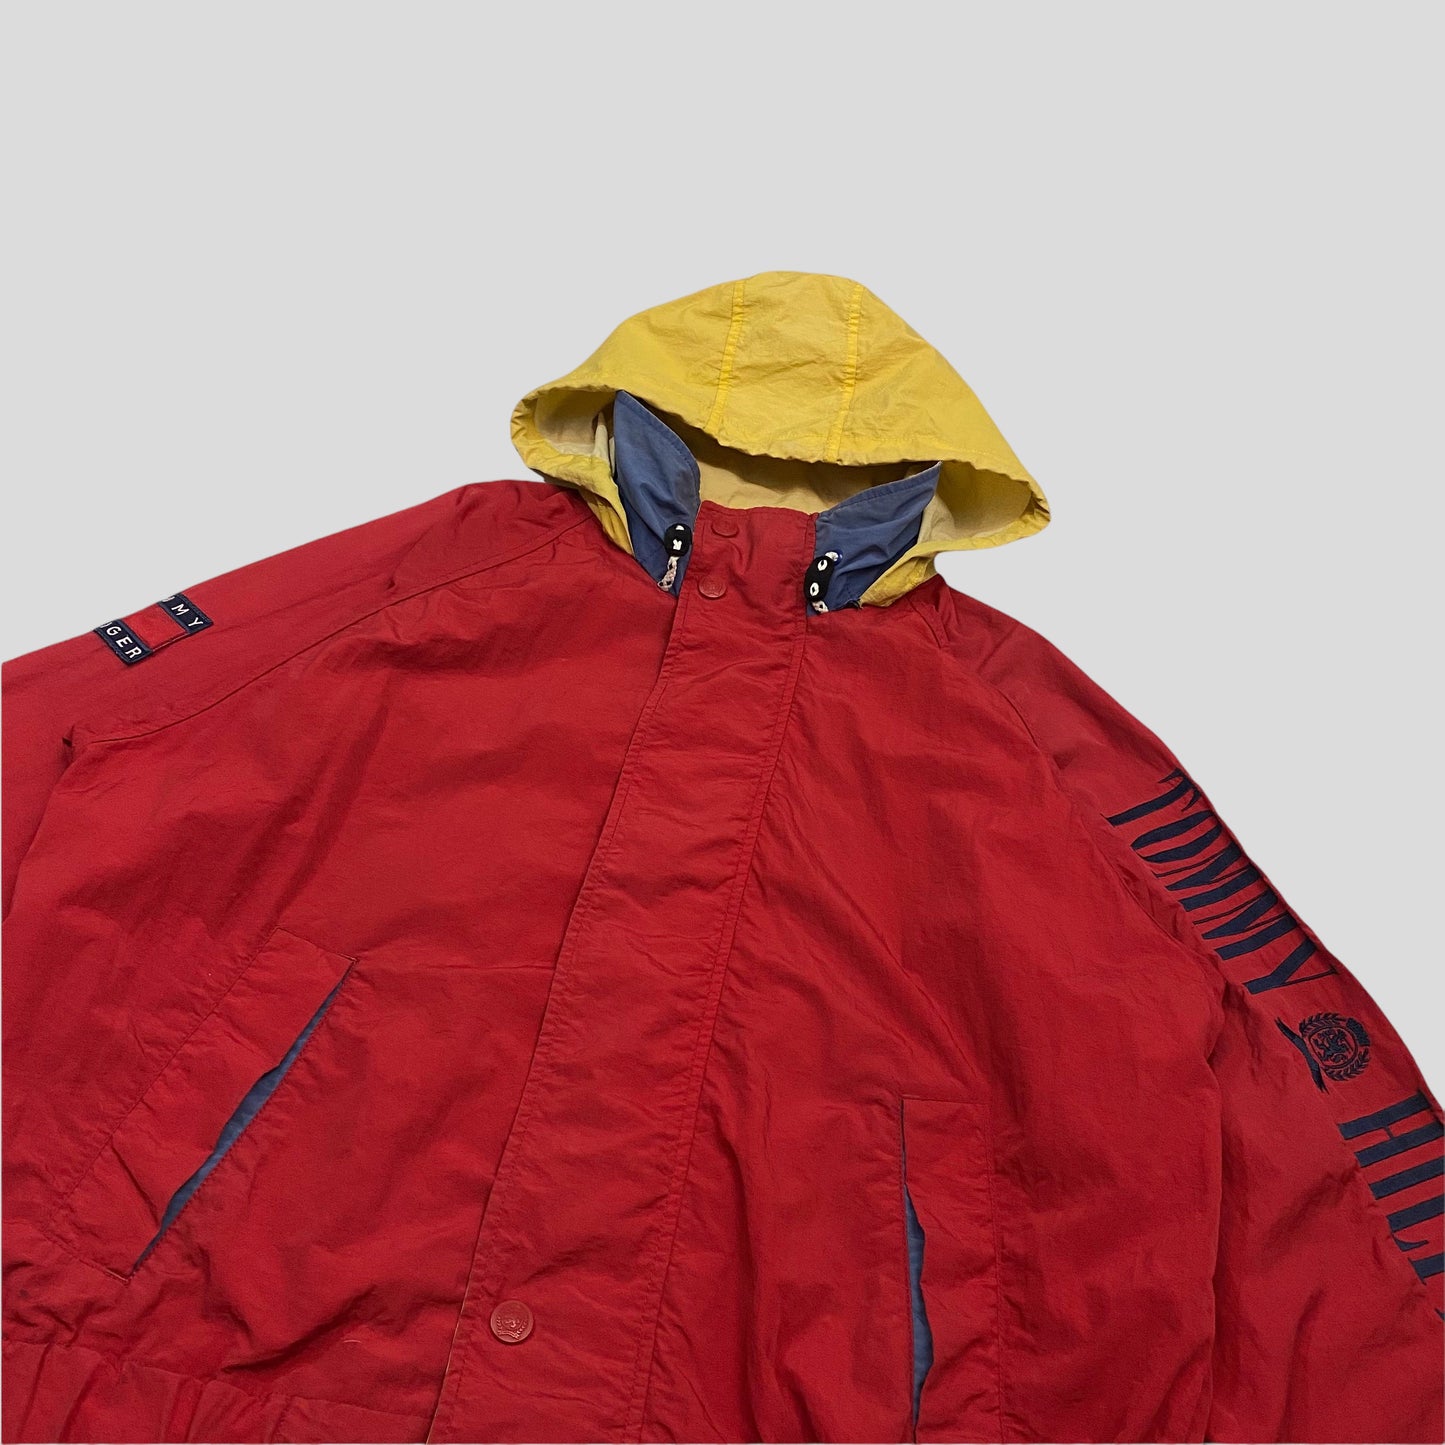 Tommy Hilfiger vintage spellout jacket - L/XL